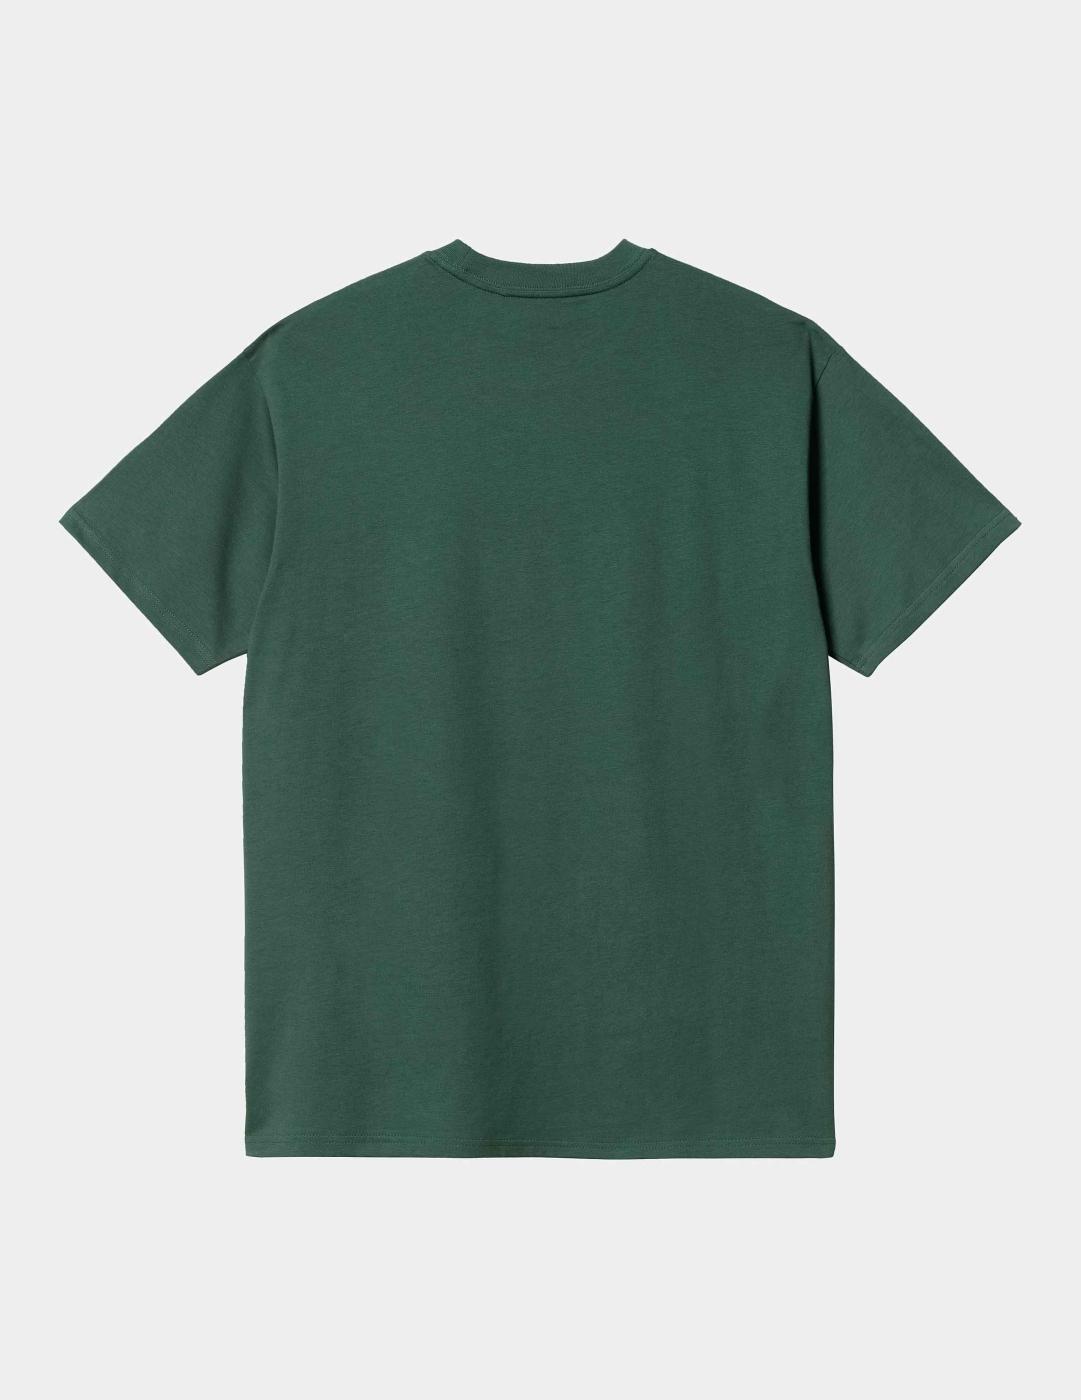 Camiseta CARHARTT SCRIPT EMBROIDERY - Hemlock Green / White